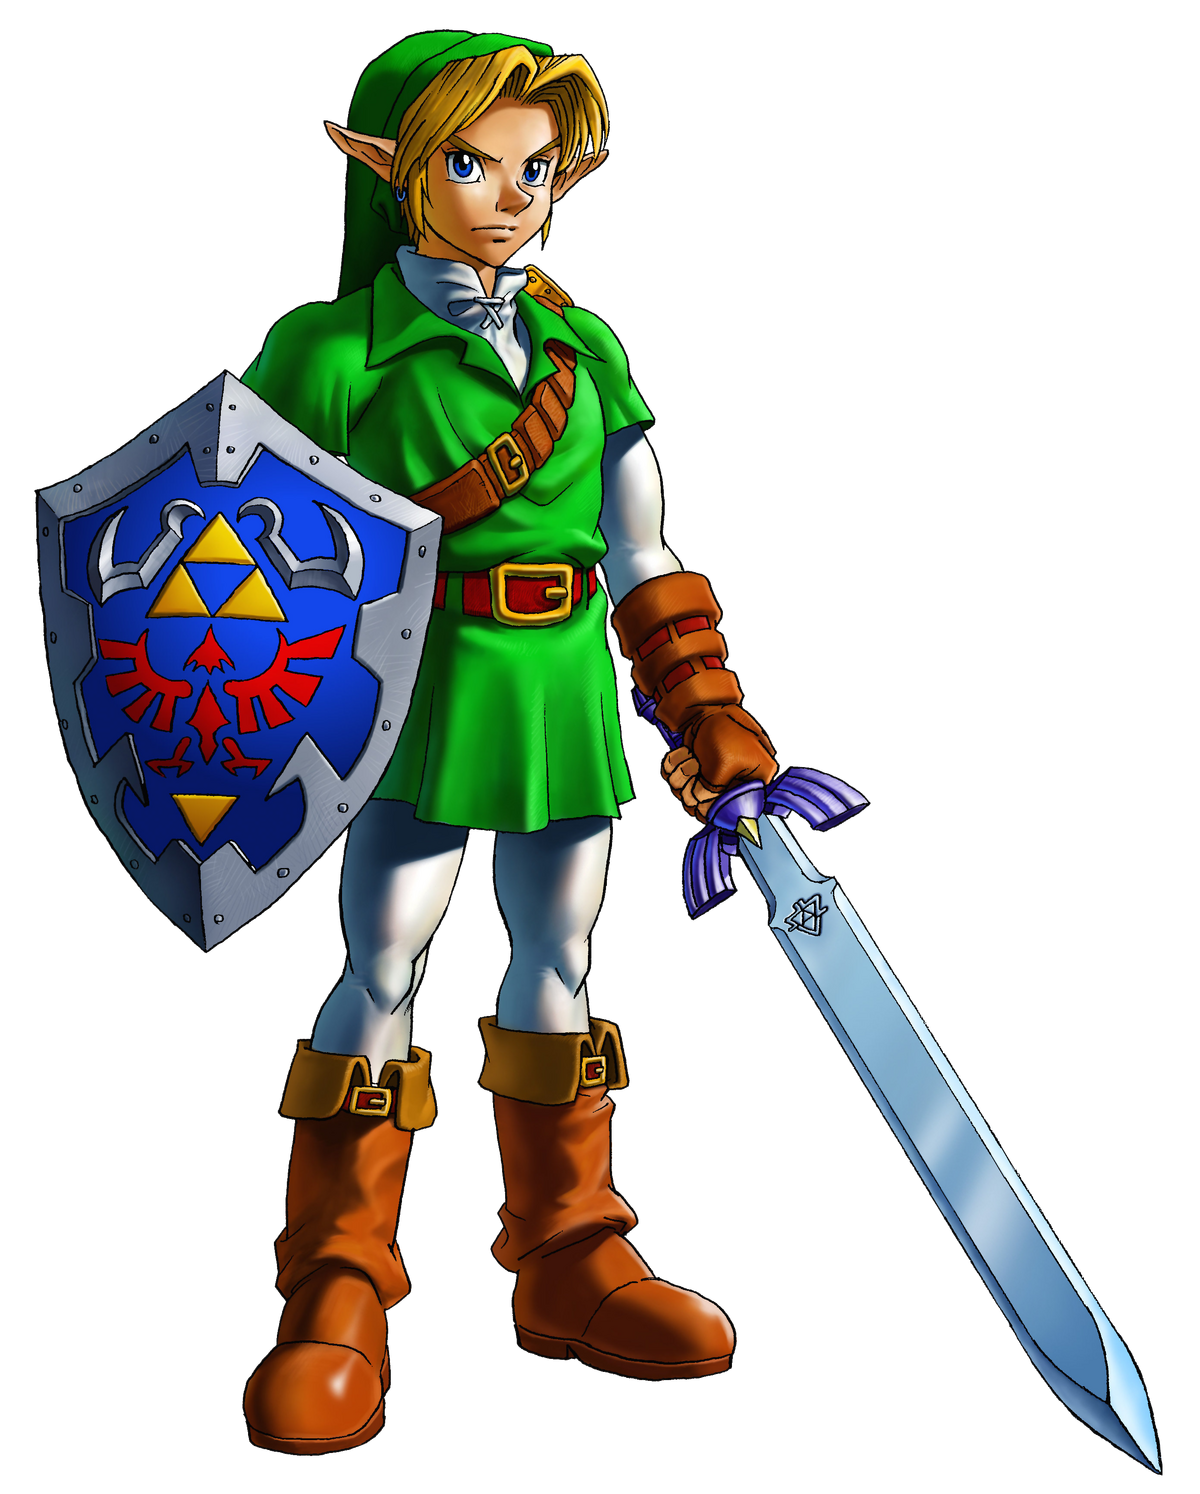 Characters of the Legend of Zelda series - Wikipedia